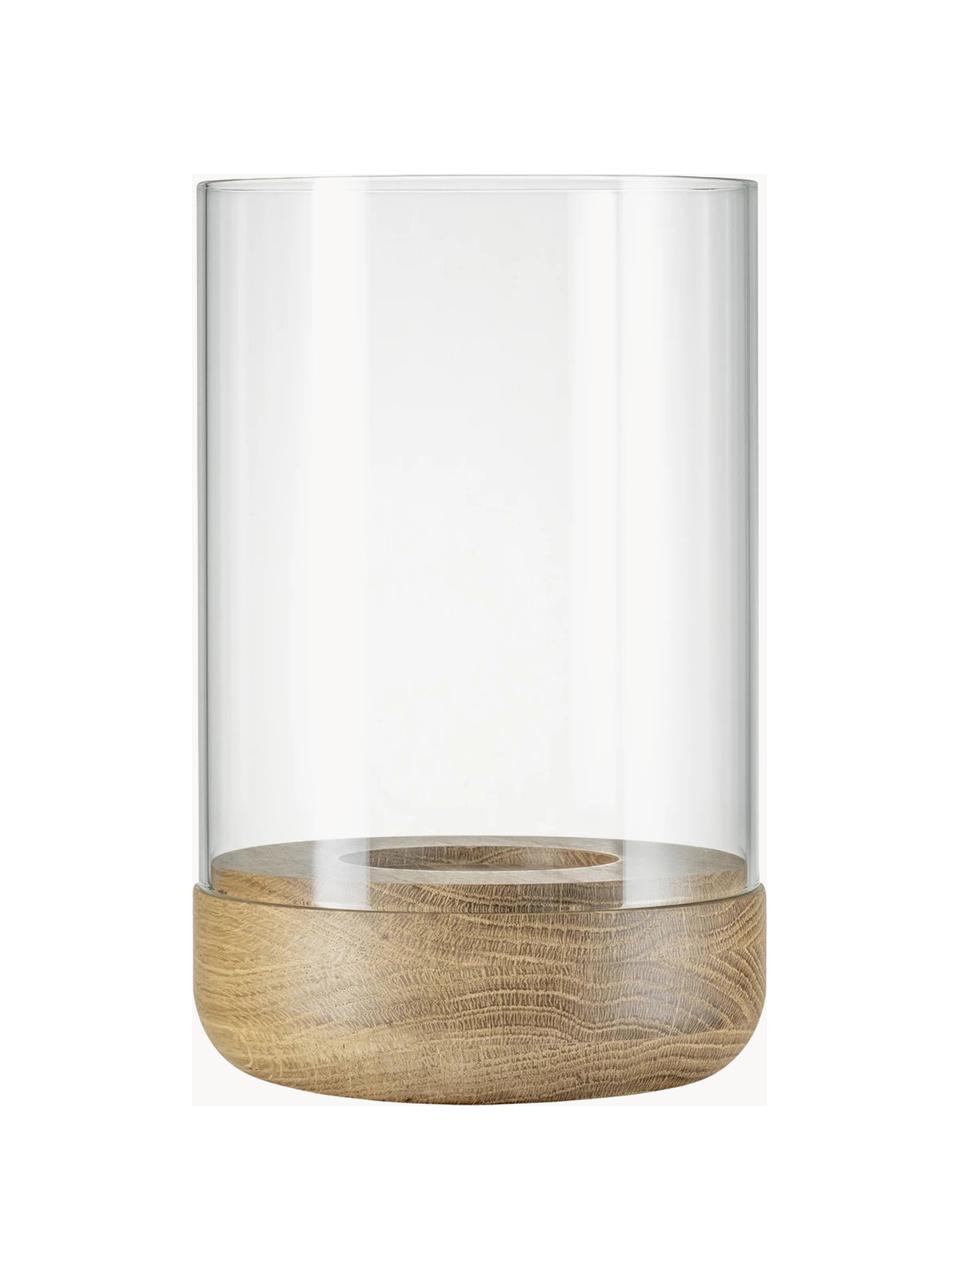 Portacandela in vetro Lanto, alt. 20 cm, Portacandela: vetro, Trasparente, legno chiaro, Ø 12 x Alt. 20 cm